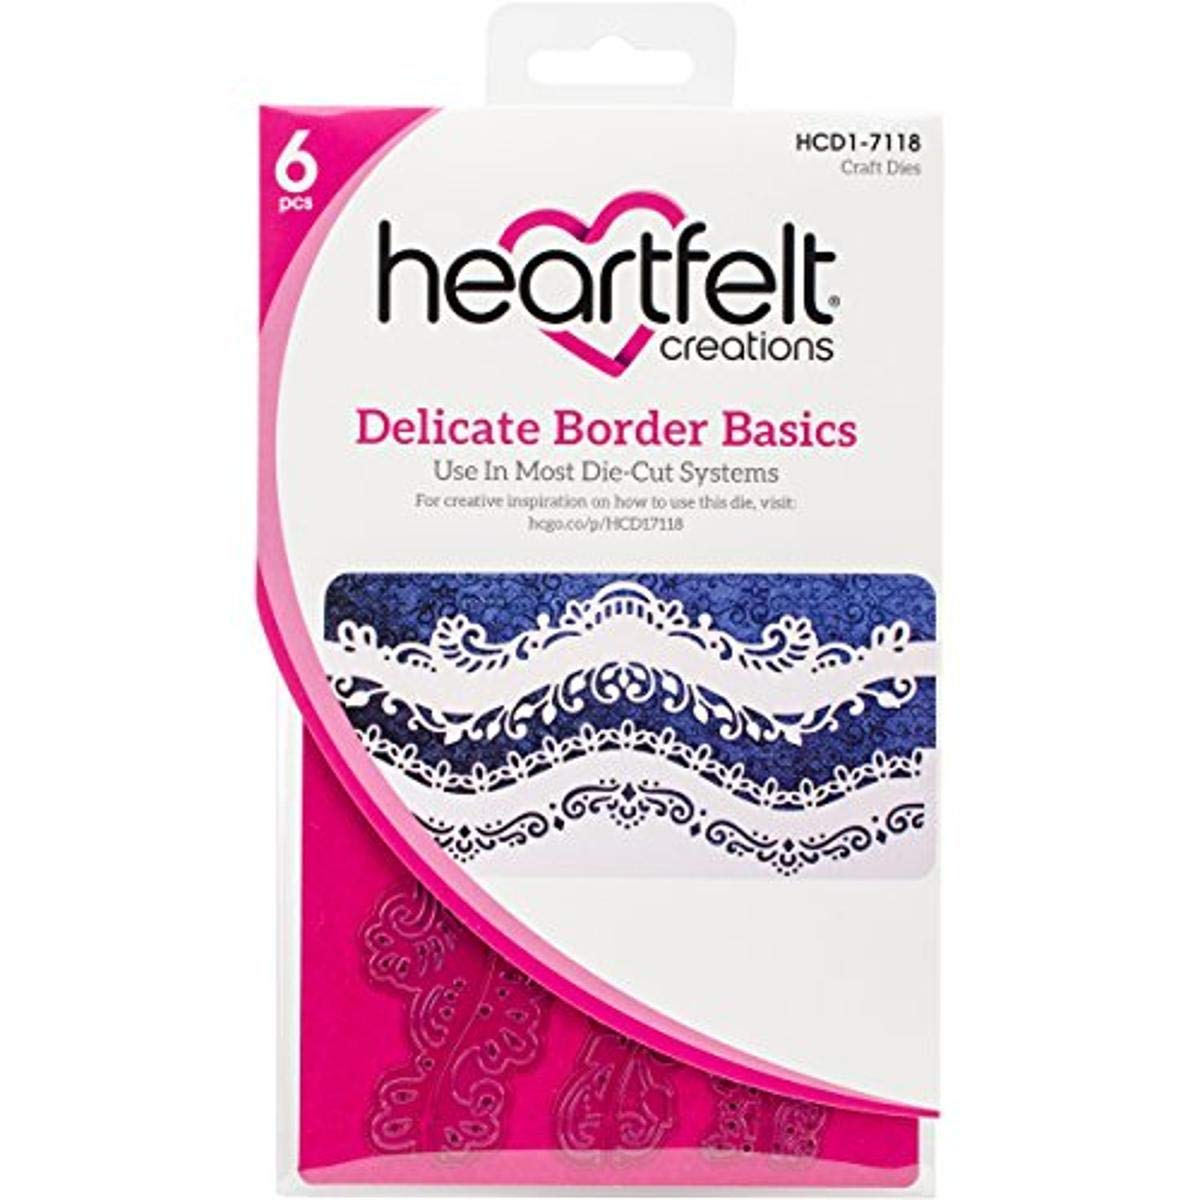 Heartfelt Creations Delicate Border Basics HCD17118